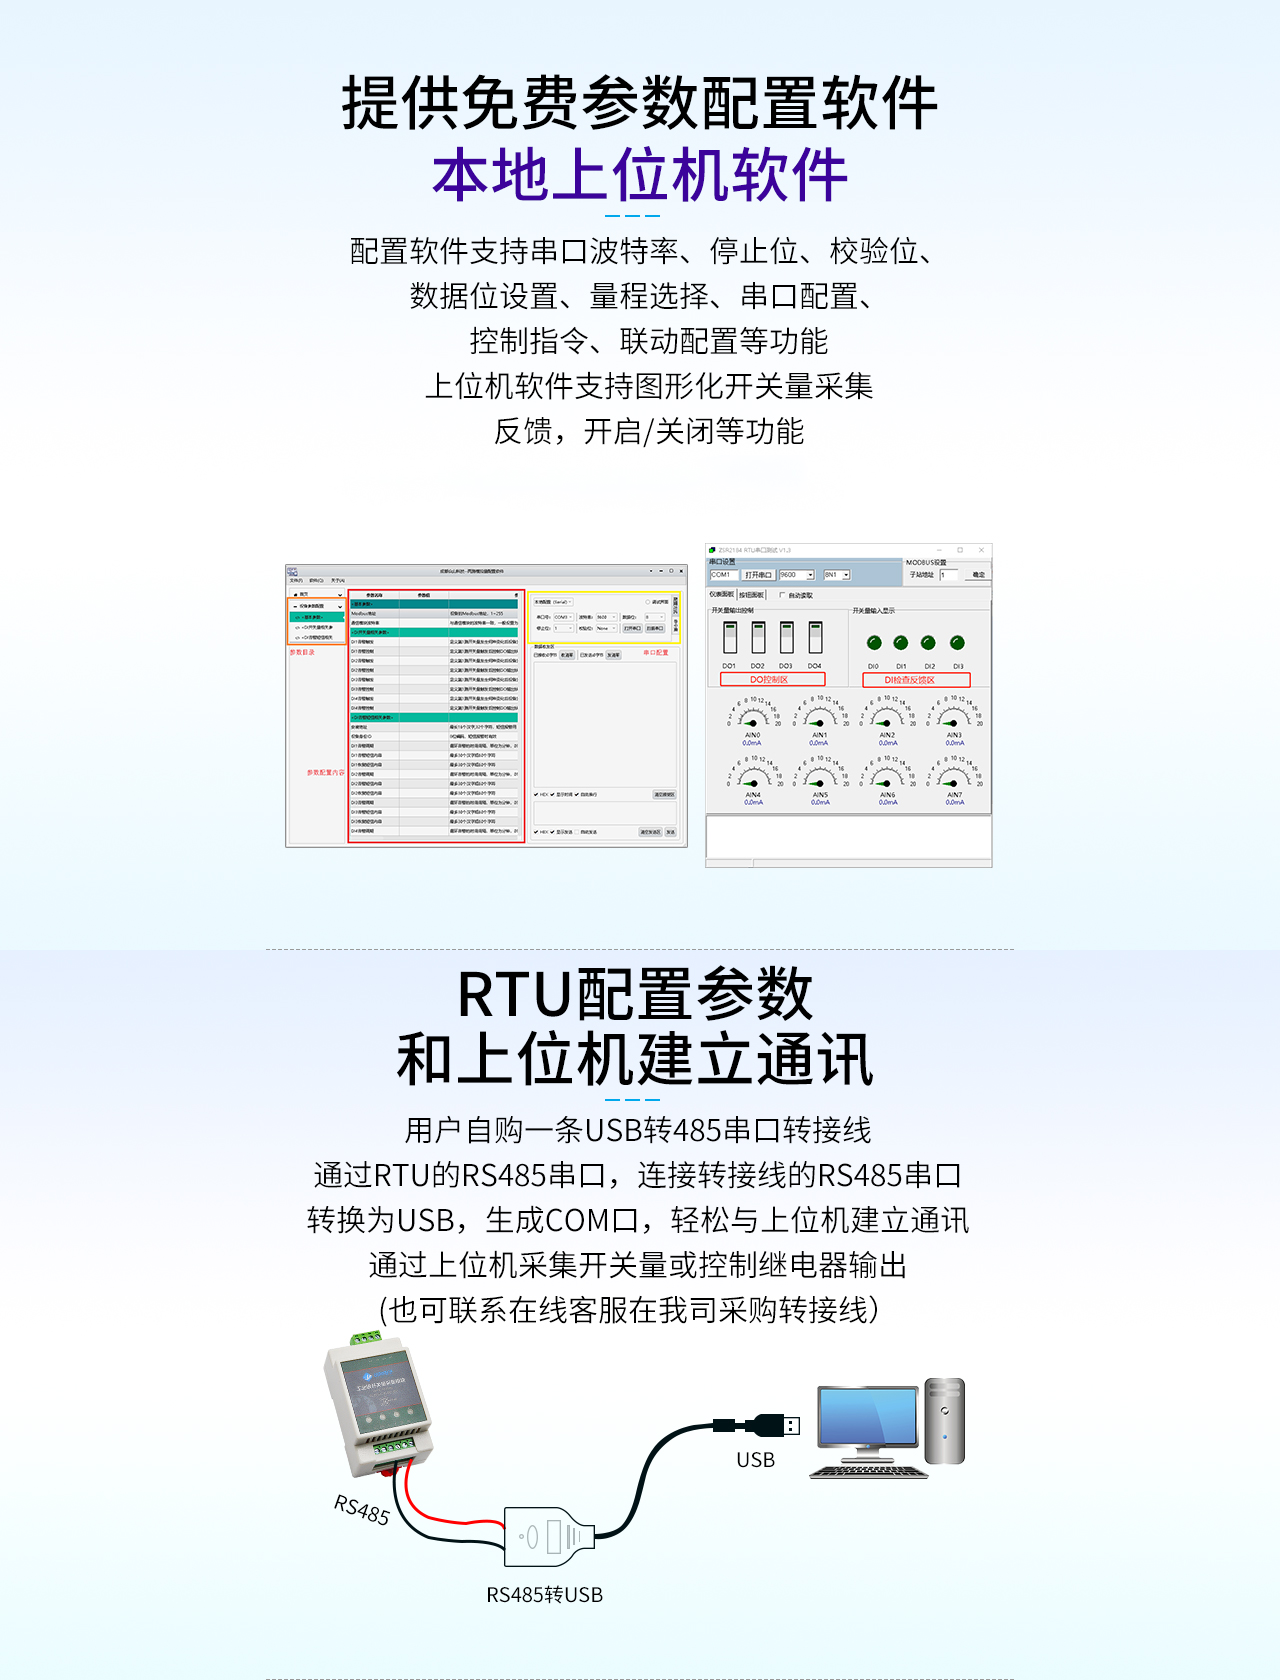 RTU配置参数和上位机建立通讯